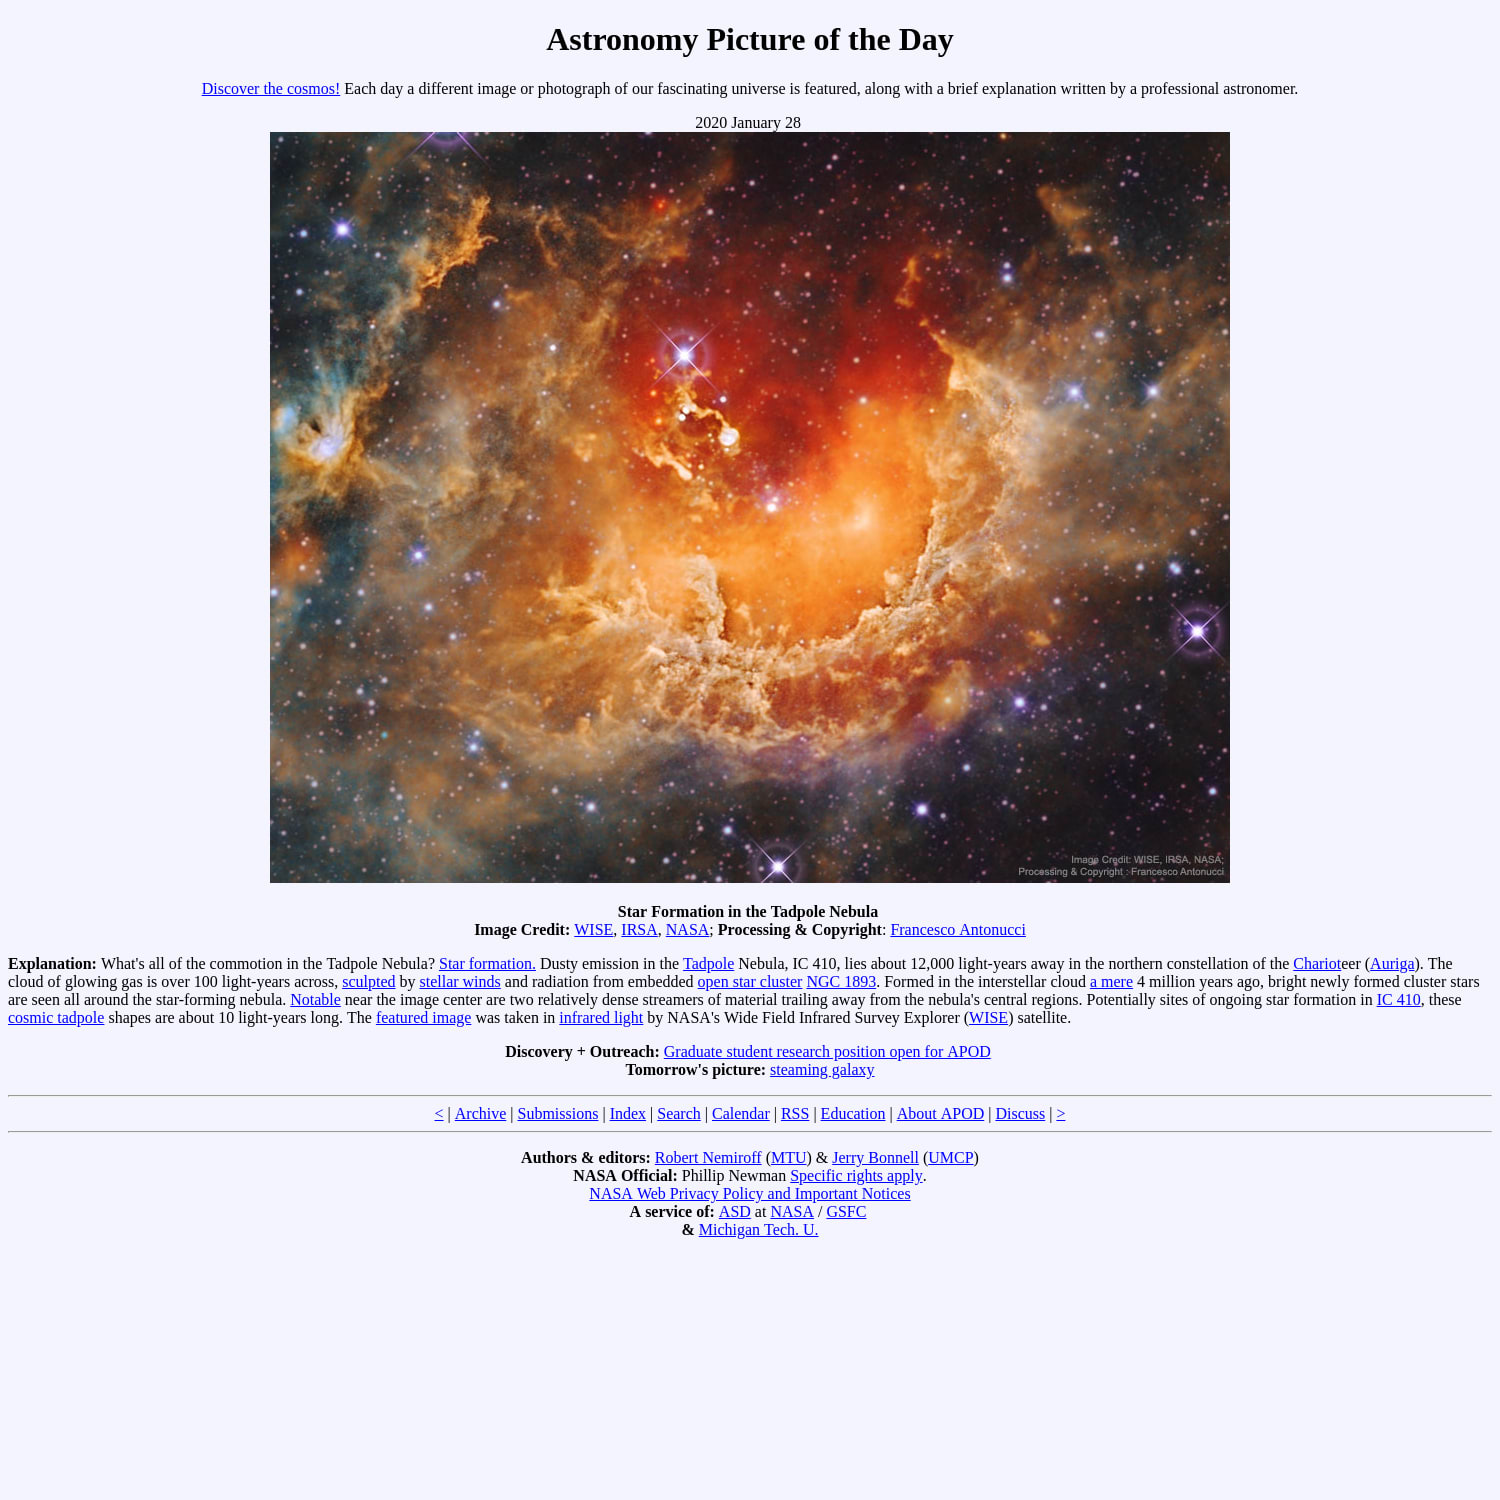 APOD: 2020 January 28 - Star Formation in the Tadpole Nebula